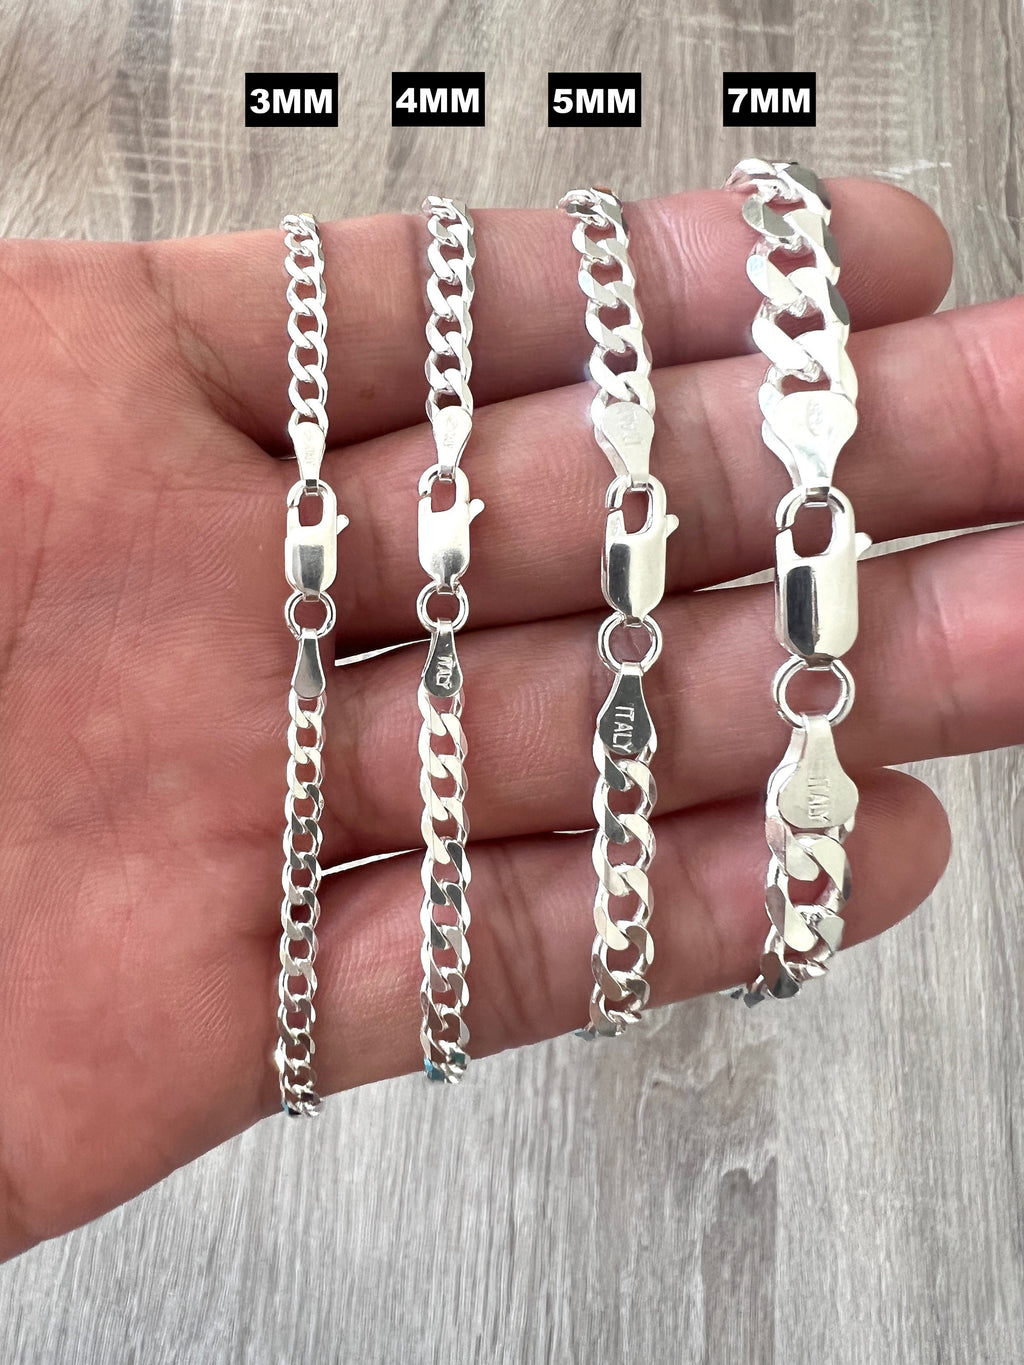 Silver Cuban Link Bracelet Chain